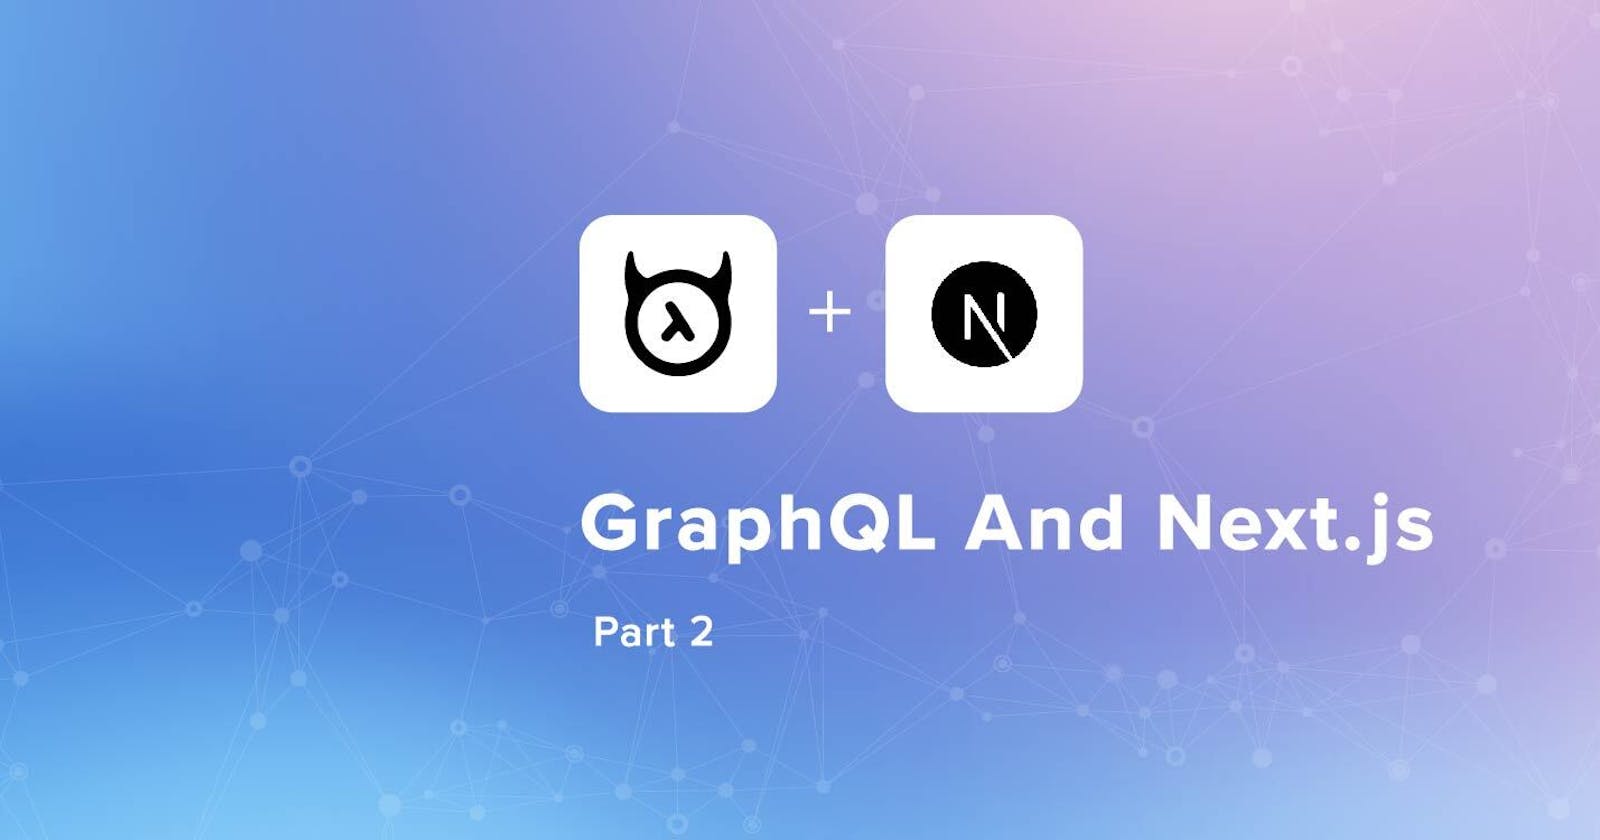 Hasura GraphQL + NextJS Part 2